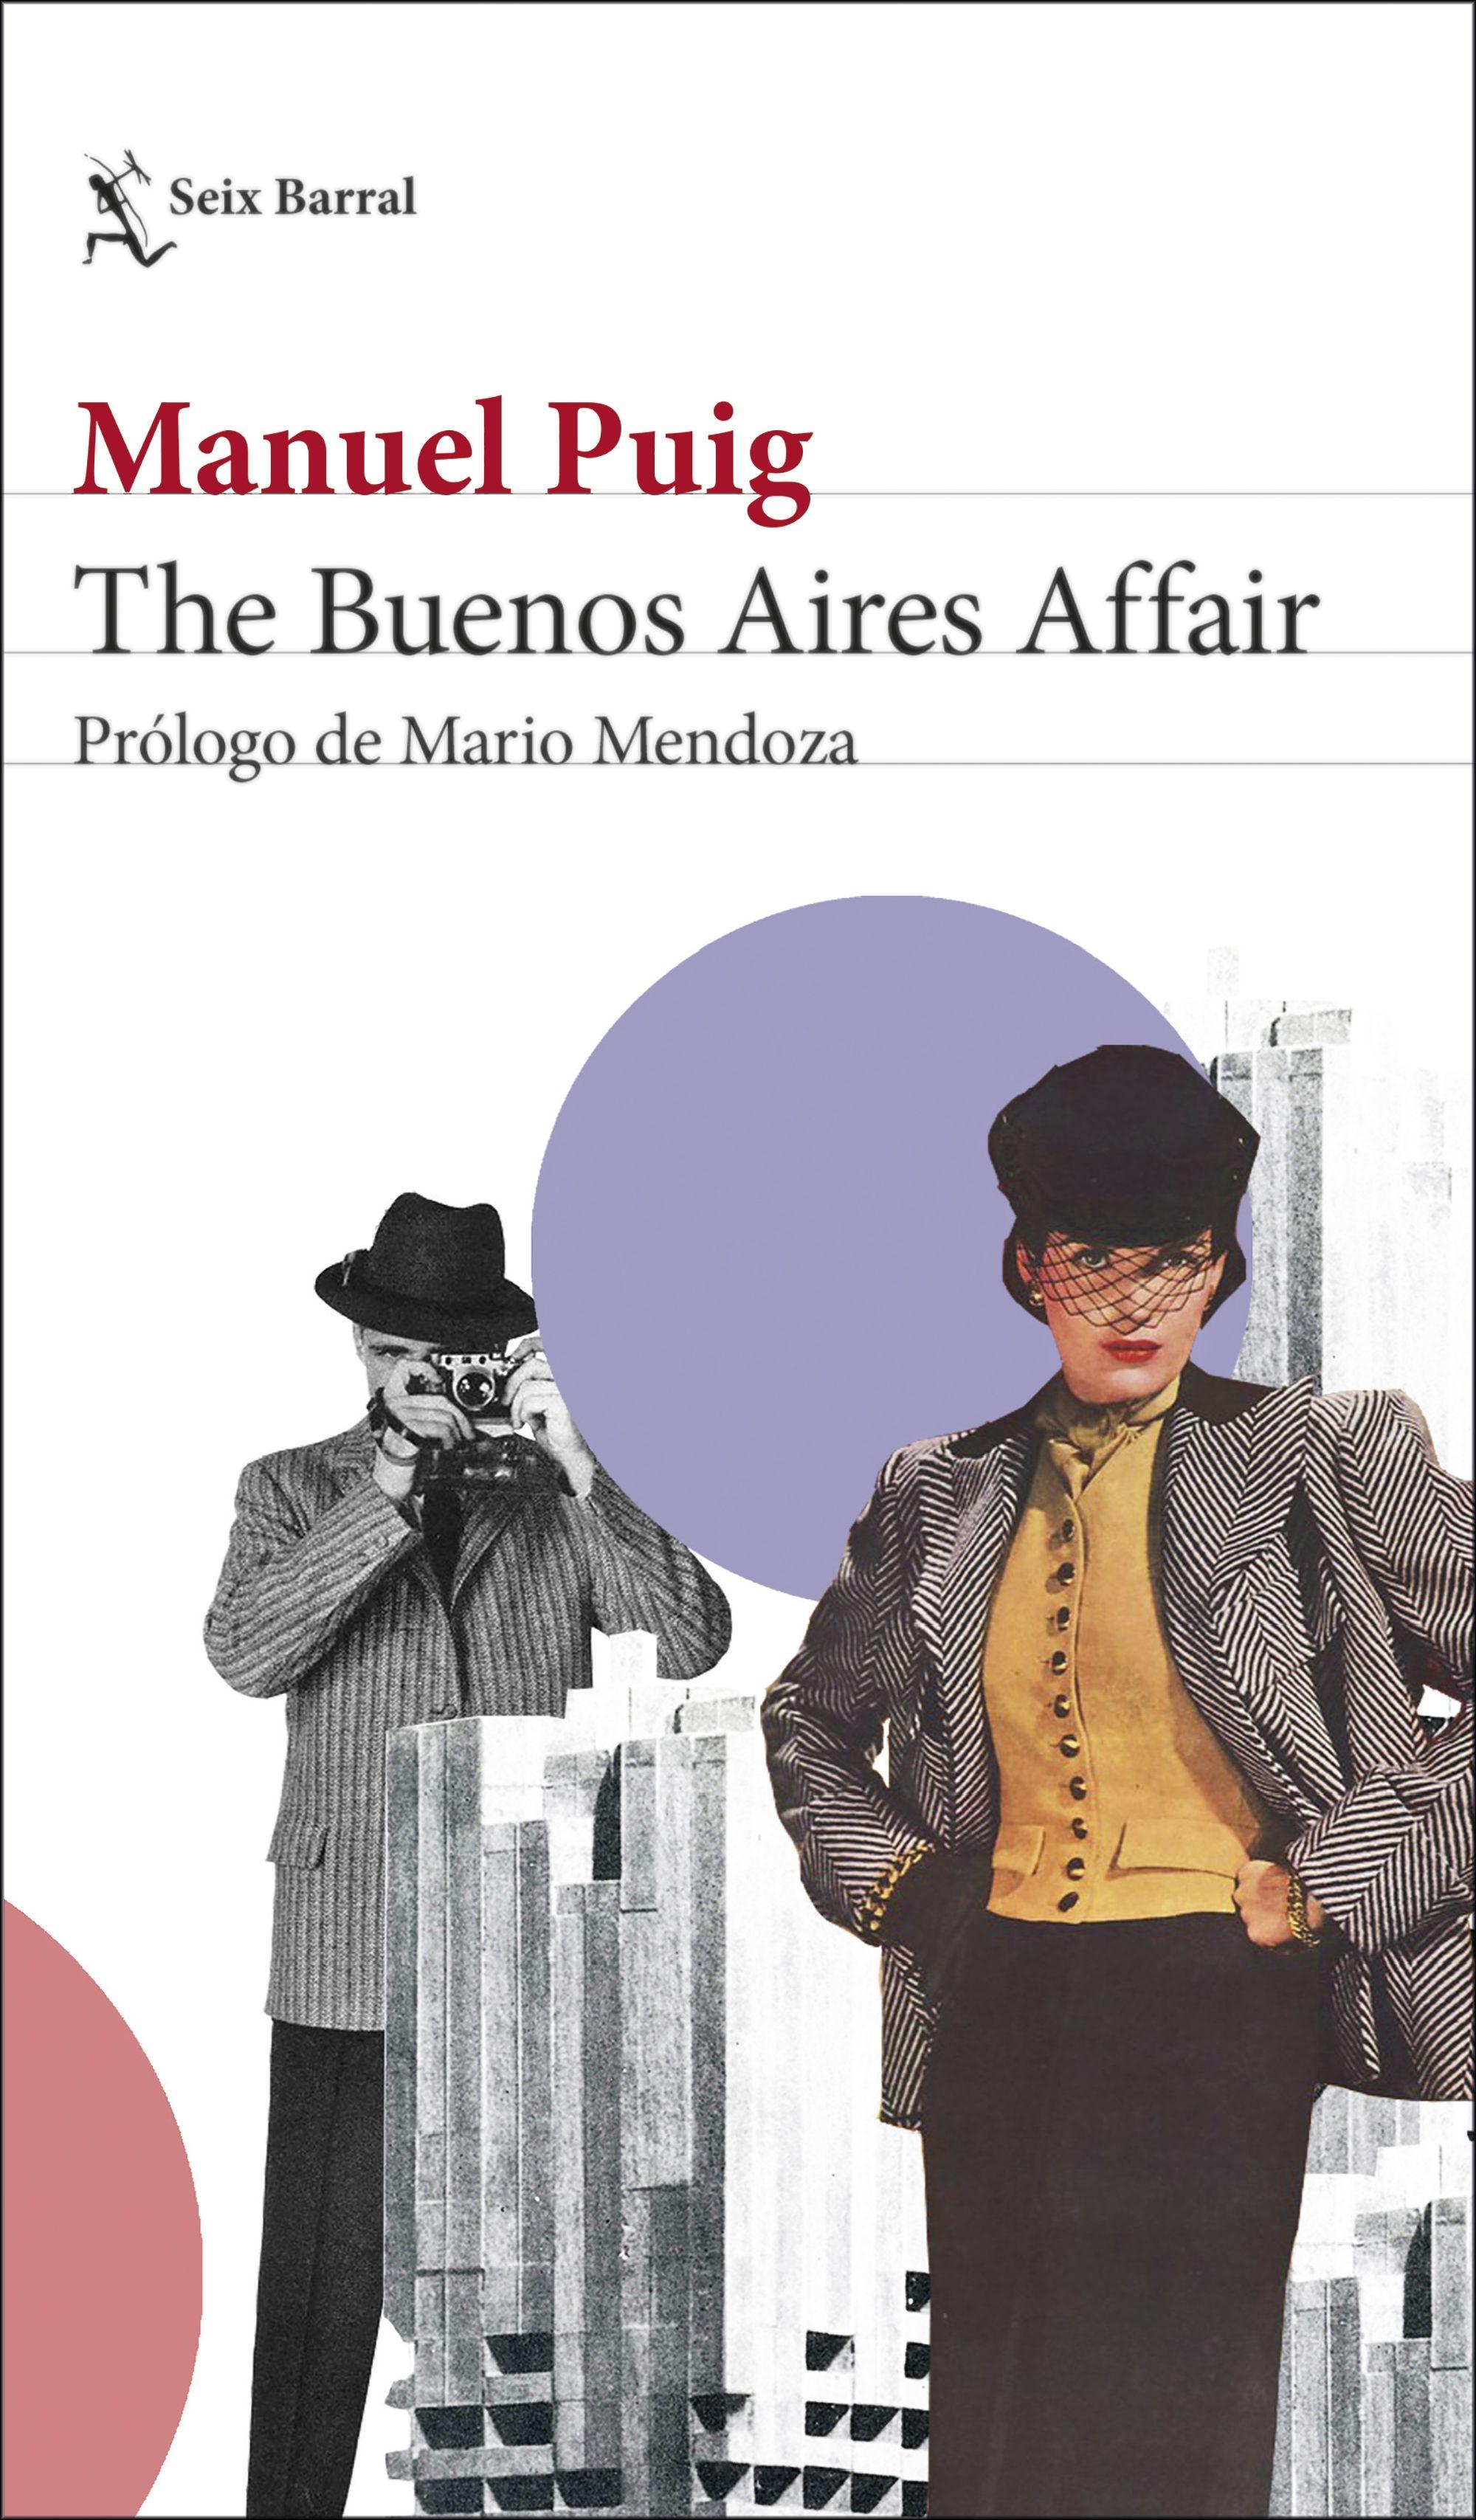 The Buenos Aires Affair "Prólogo de Mario Mendoza"